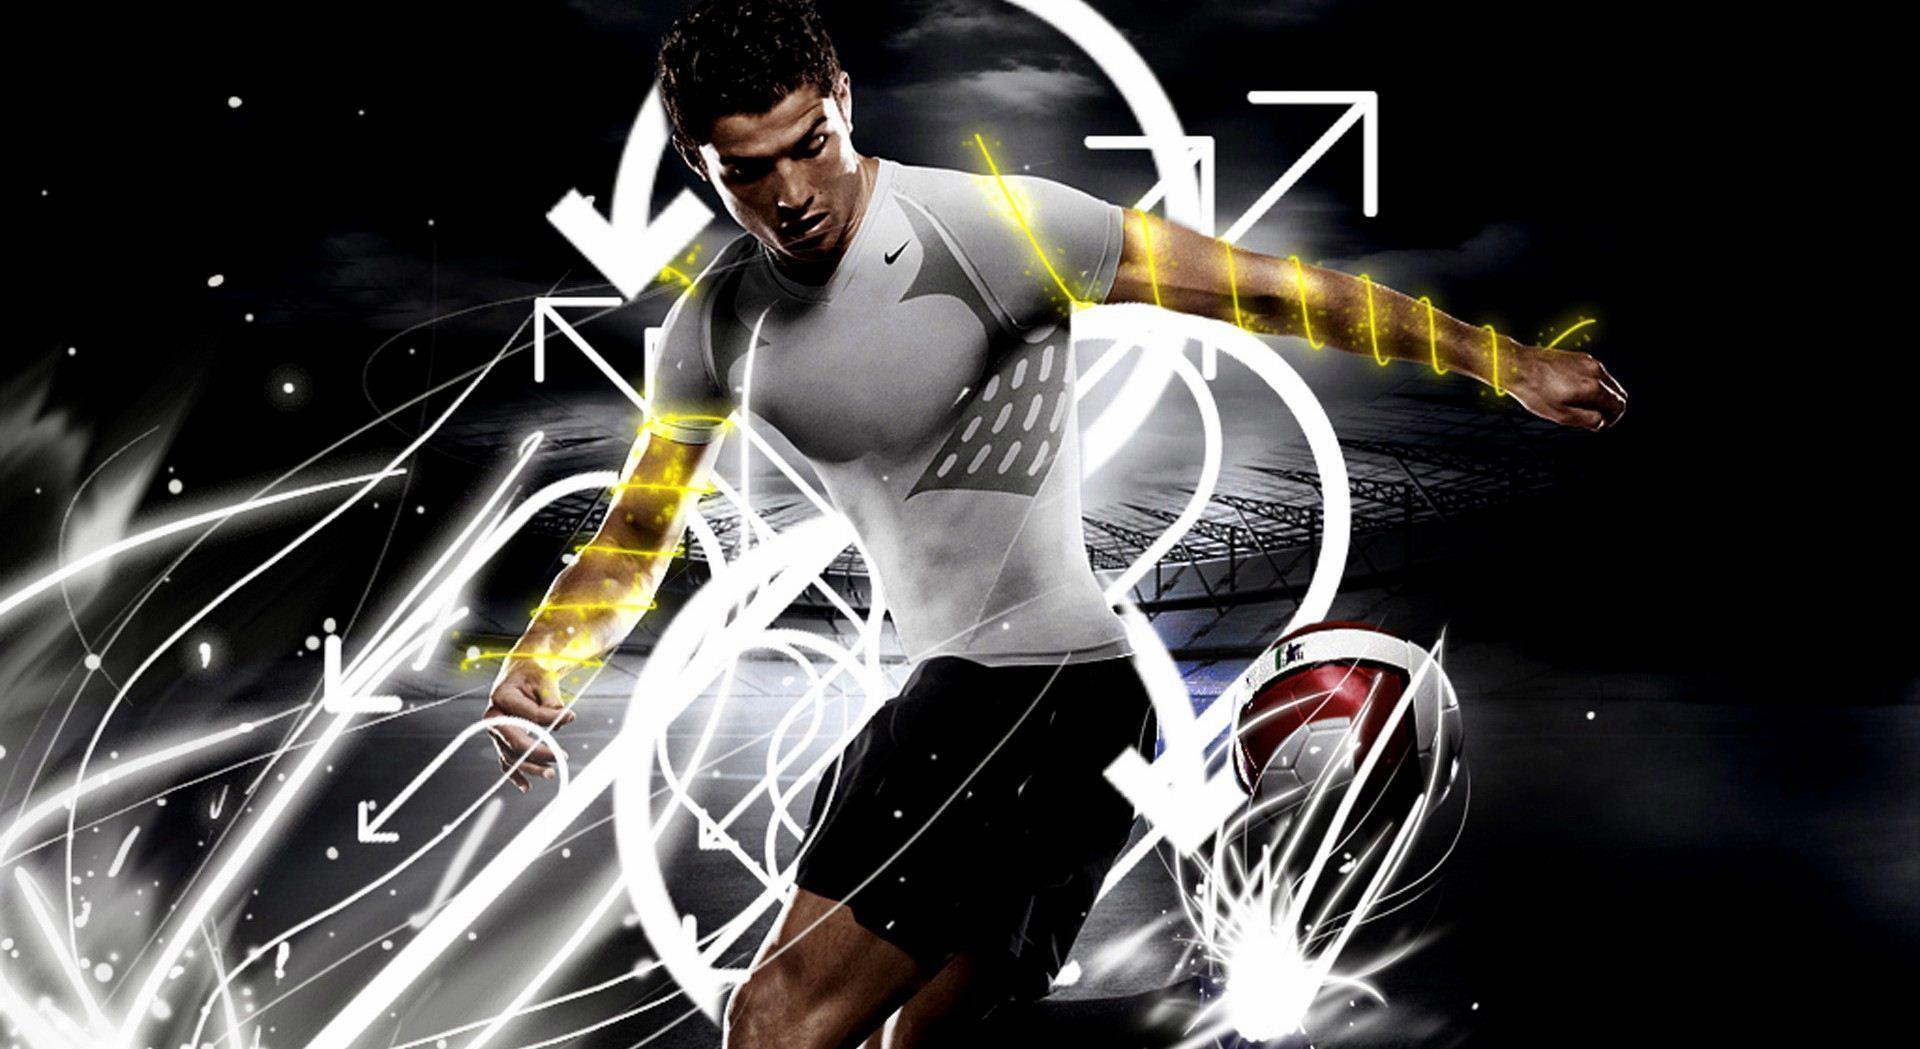 HD Cristiano Ronaldo Wallpaper 2014 Nike Wallpaper